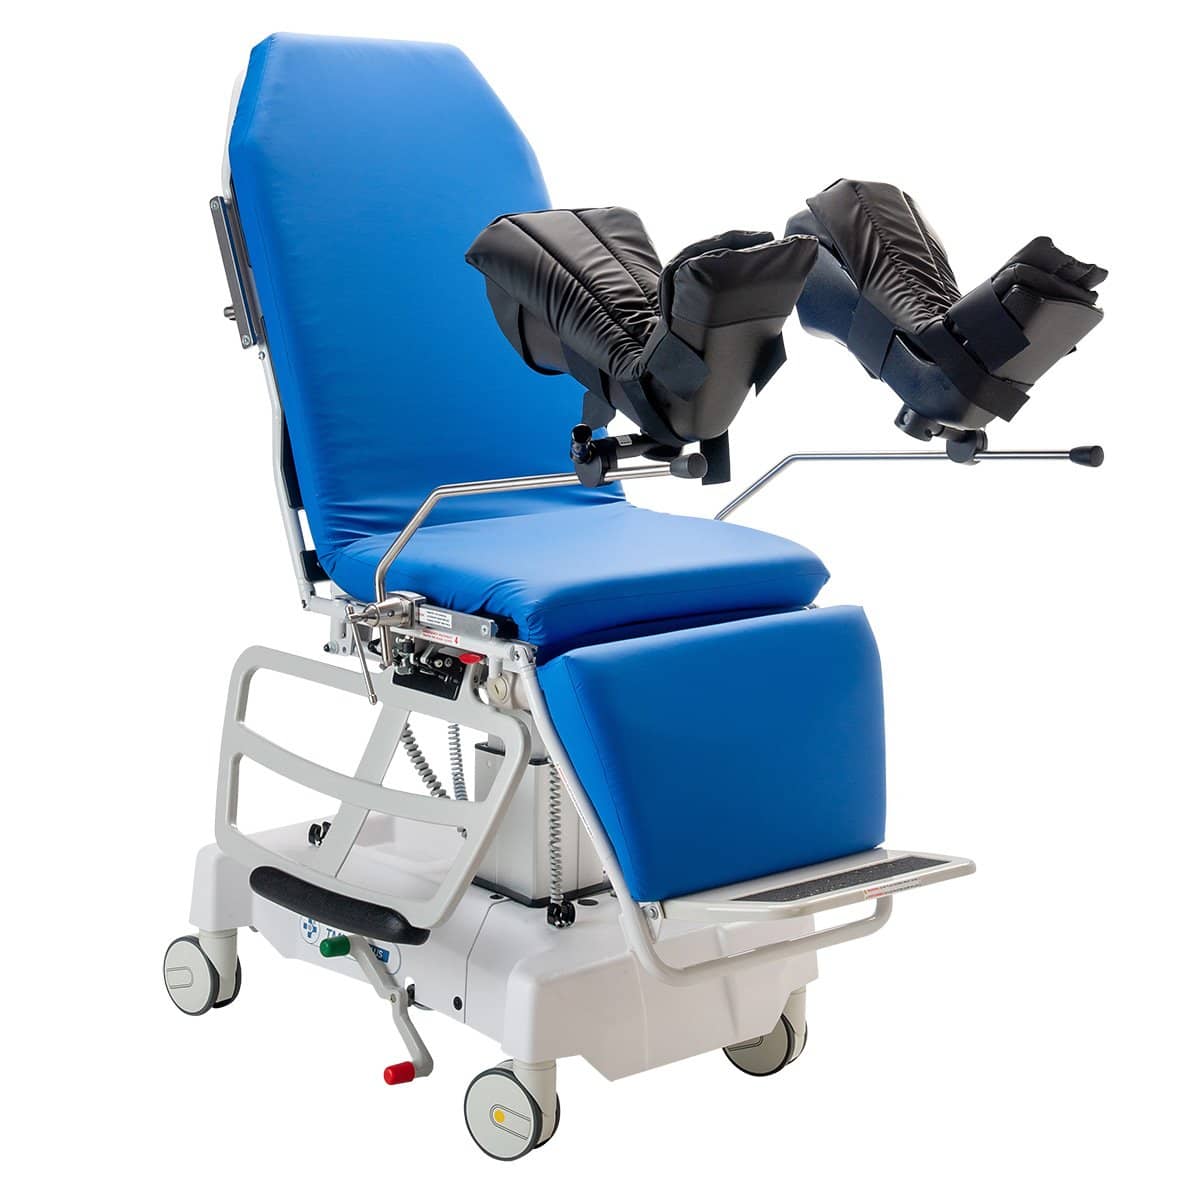 TransMotion Medical Leg Positioning System - Pair Full View